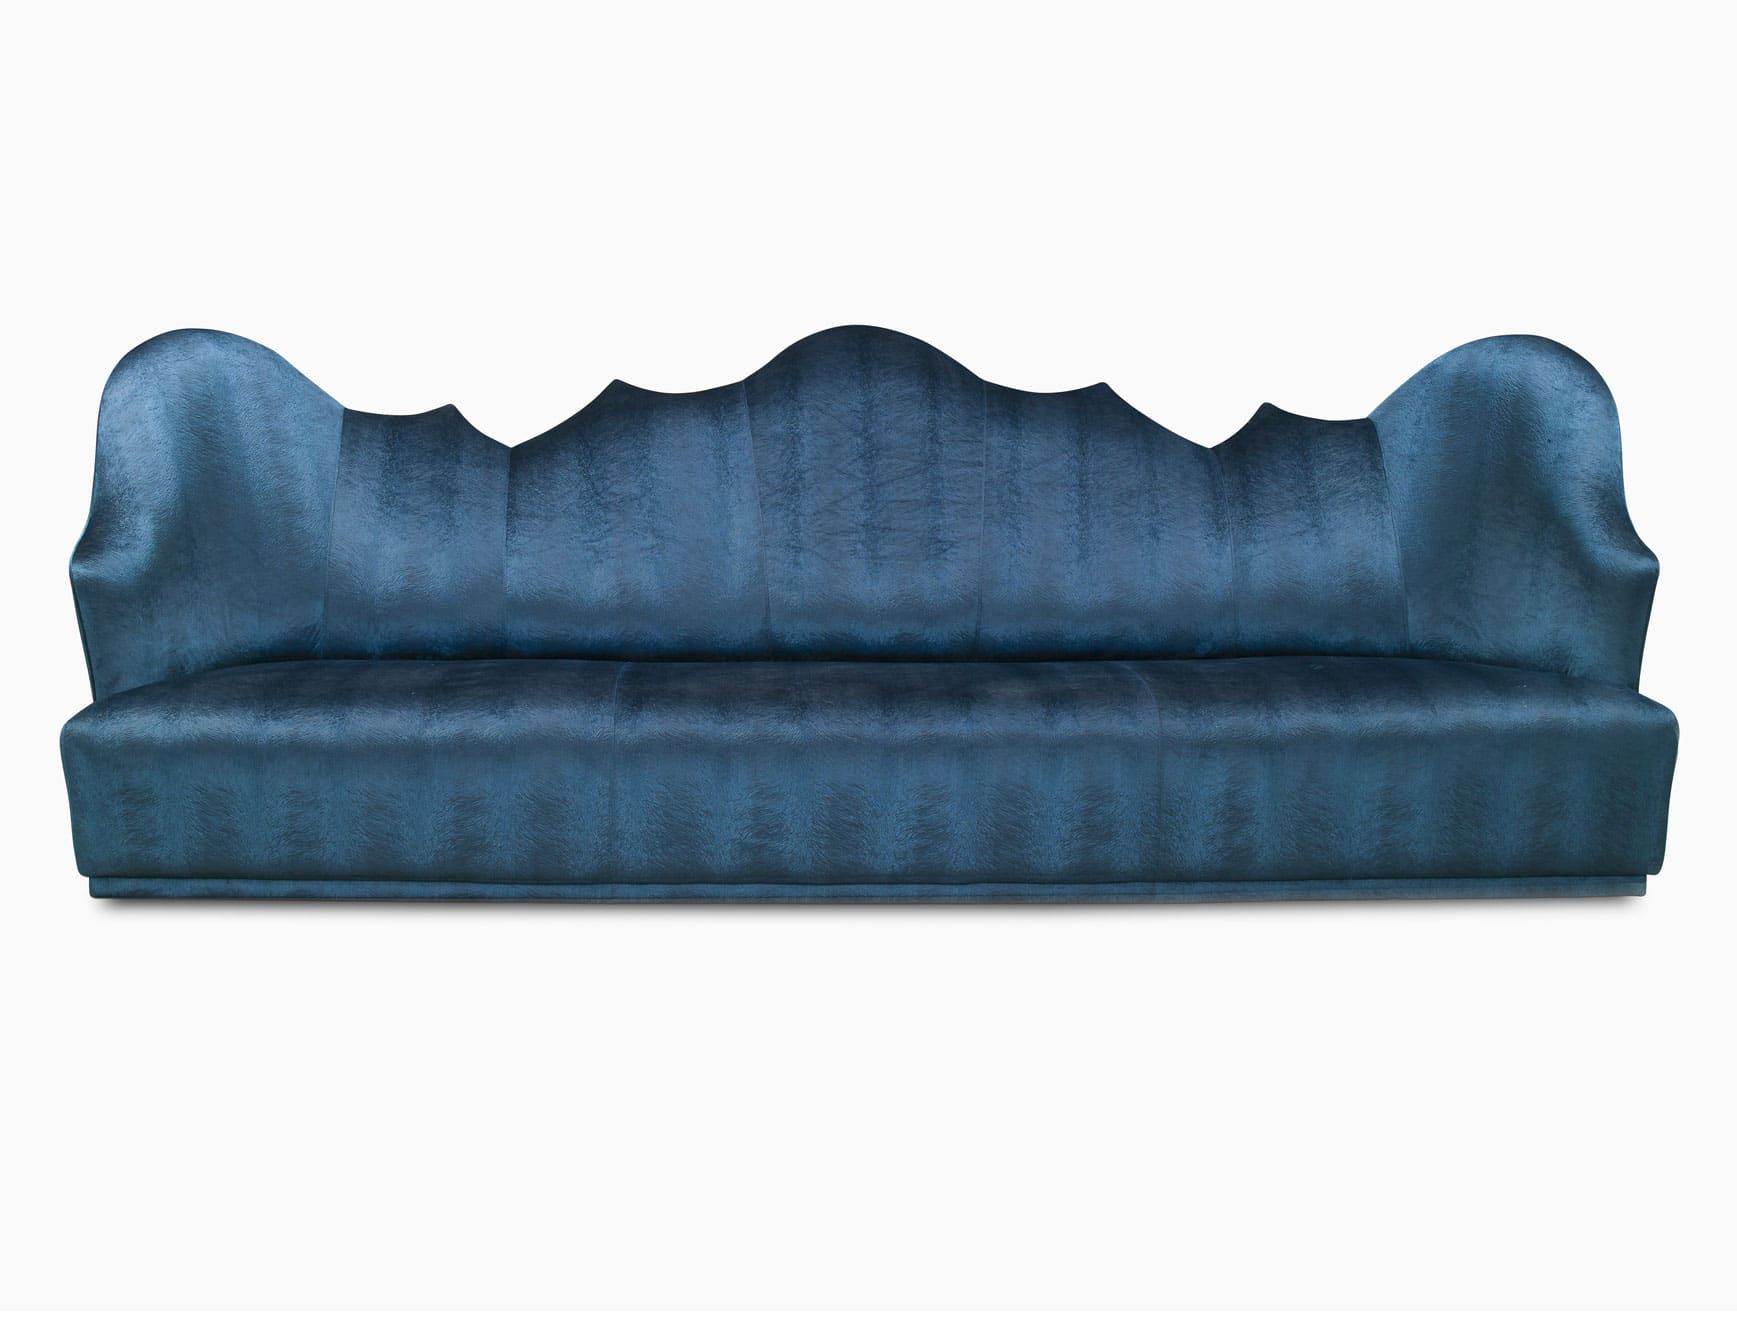 Sierra contemporary Italian sofa chair with blue fabric